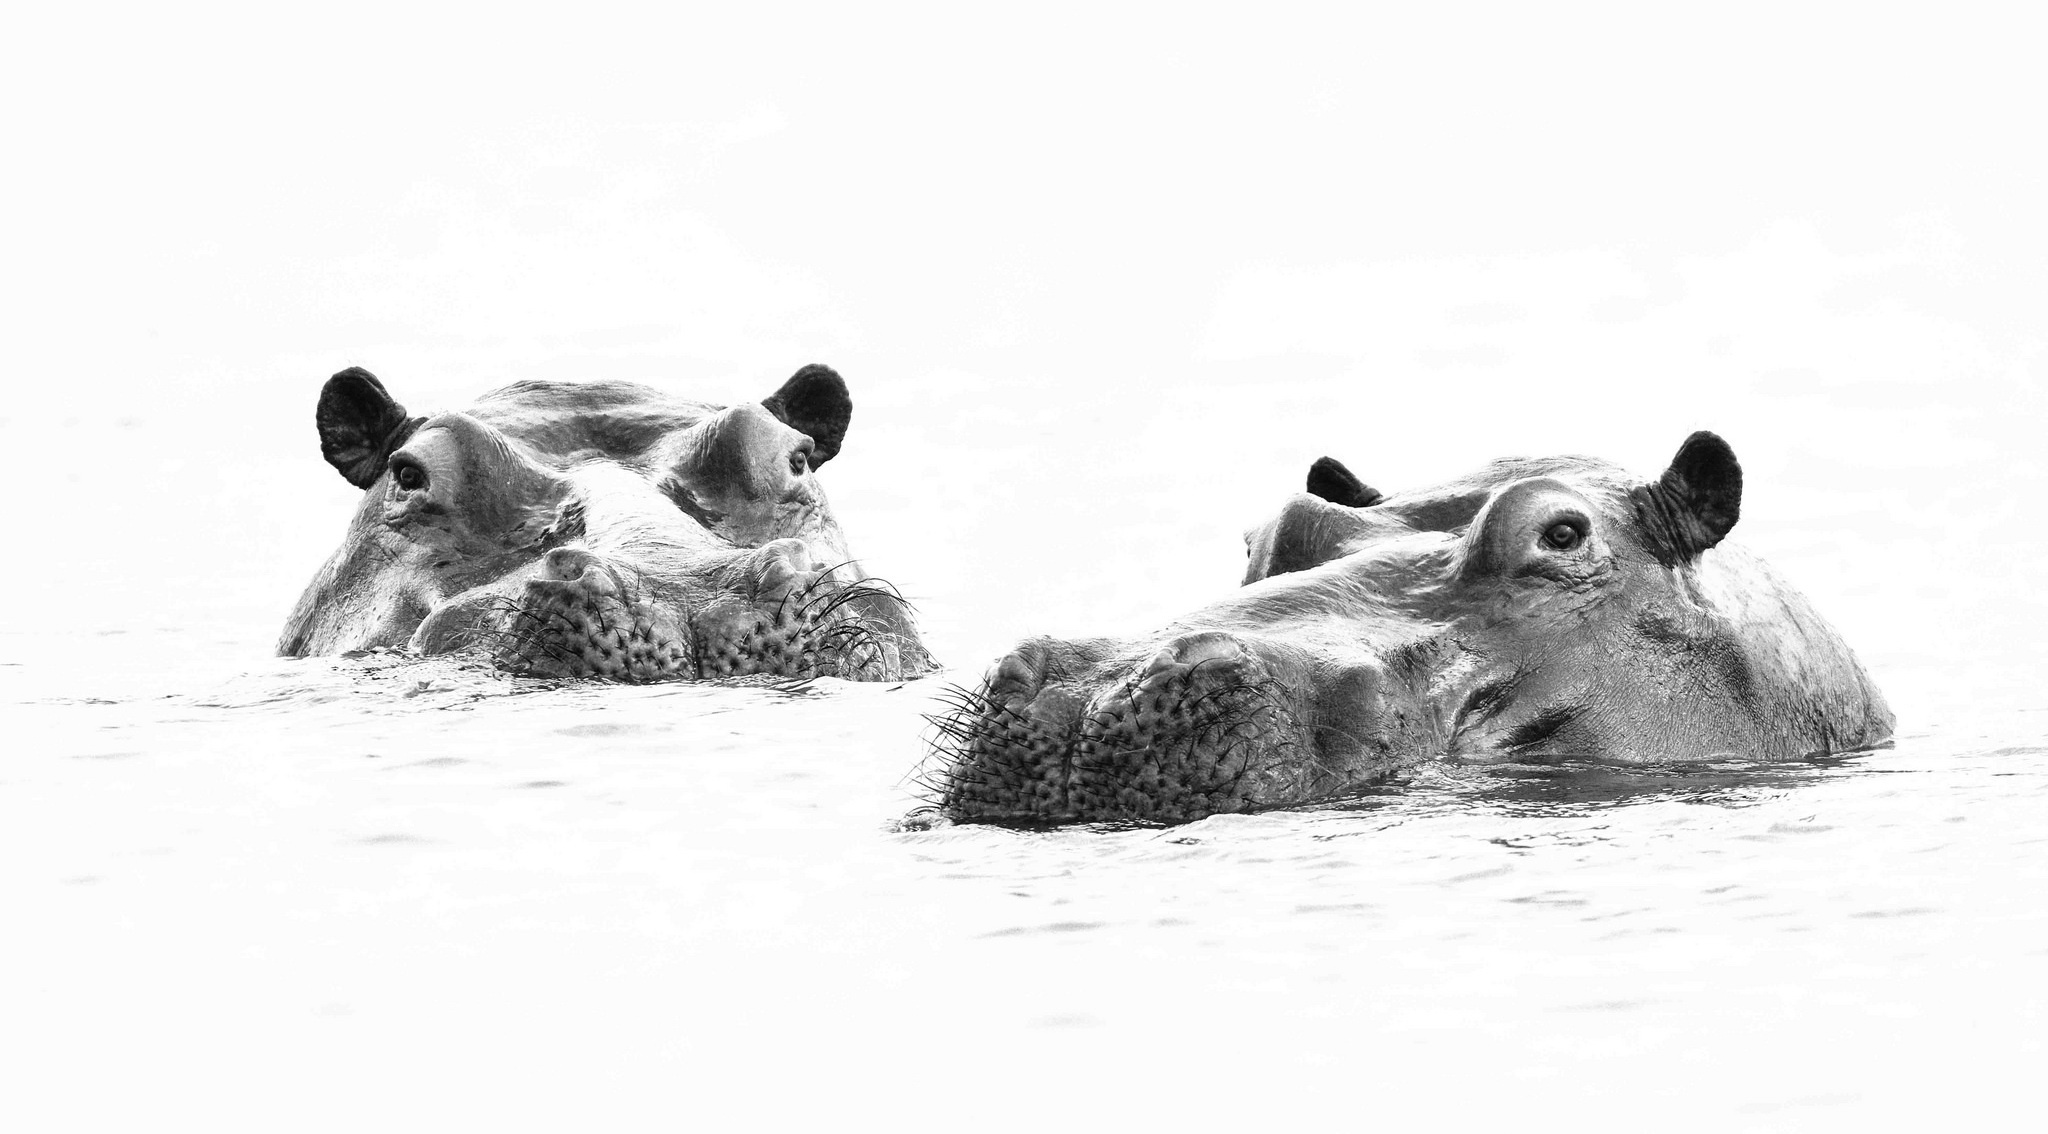 Animal Hippo Hippopotamus Amphibius Large Herbivorous Semi Mammal Born In  Sub Saharan Africa Desktop Wallpaper Hd For Mobile Phones And Laptops  3840x2400 : Wallpapers13.com